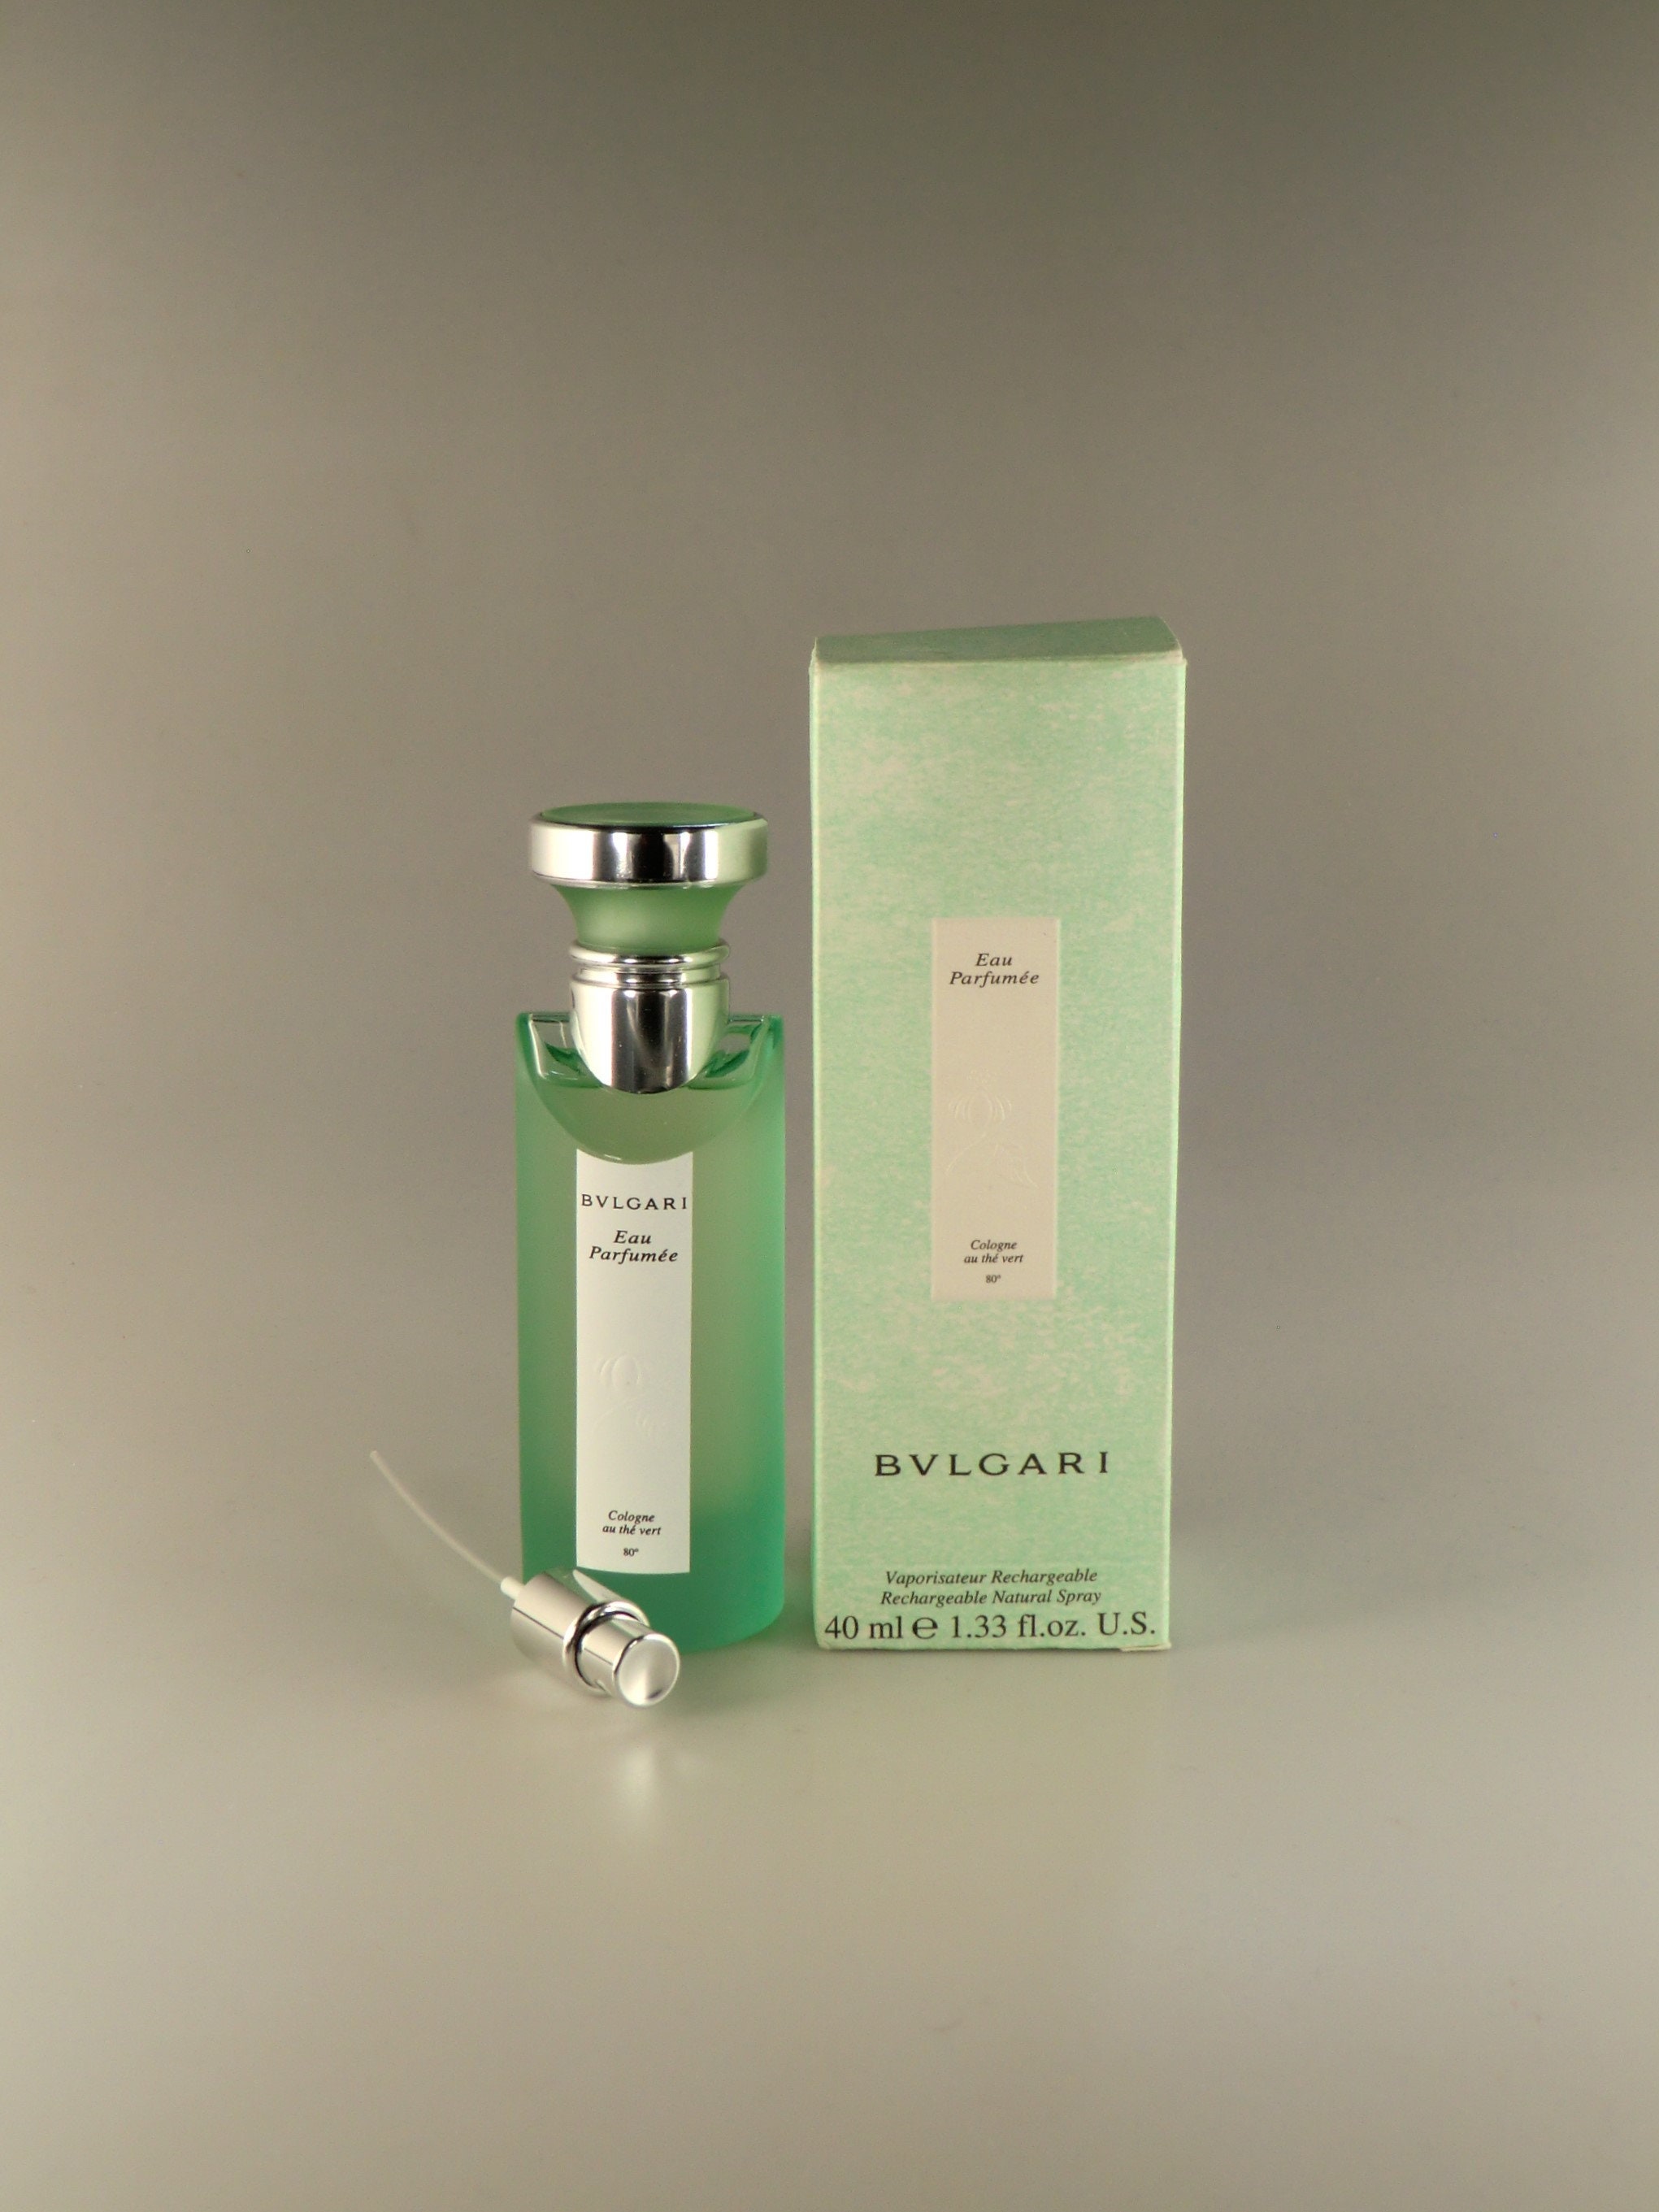 Eau Parfumee AU The Vert (Green Tea) Bvlgari 2.5 oz Body Lotion Unisex